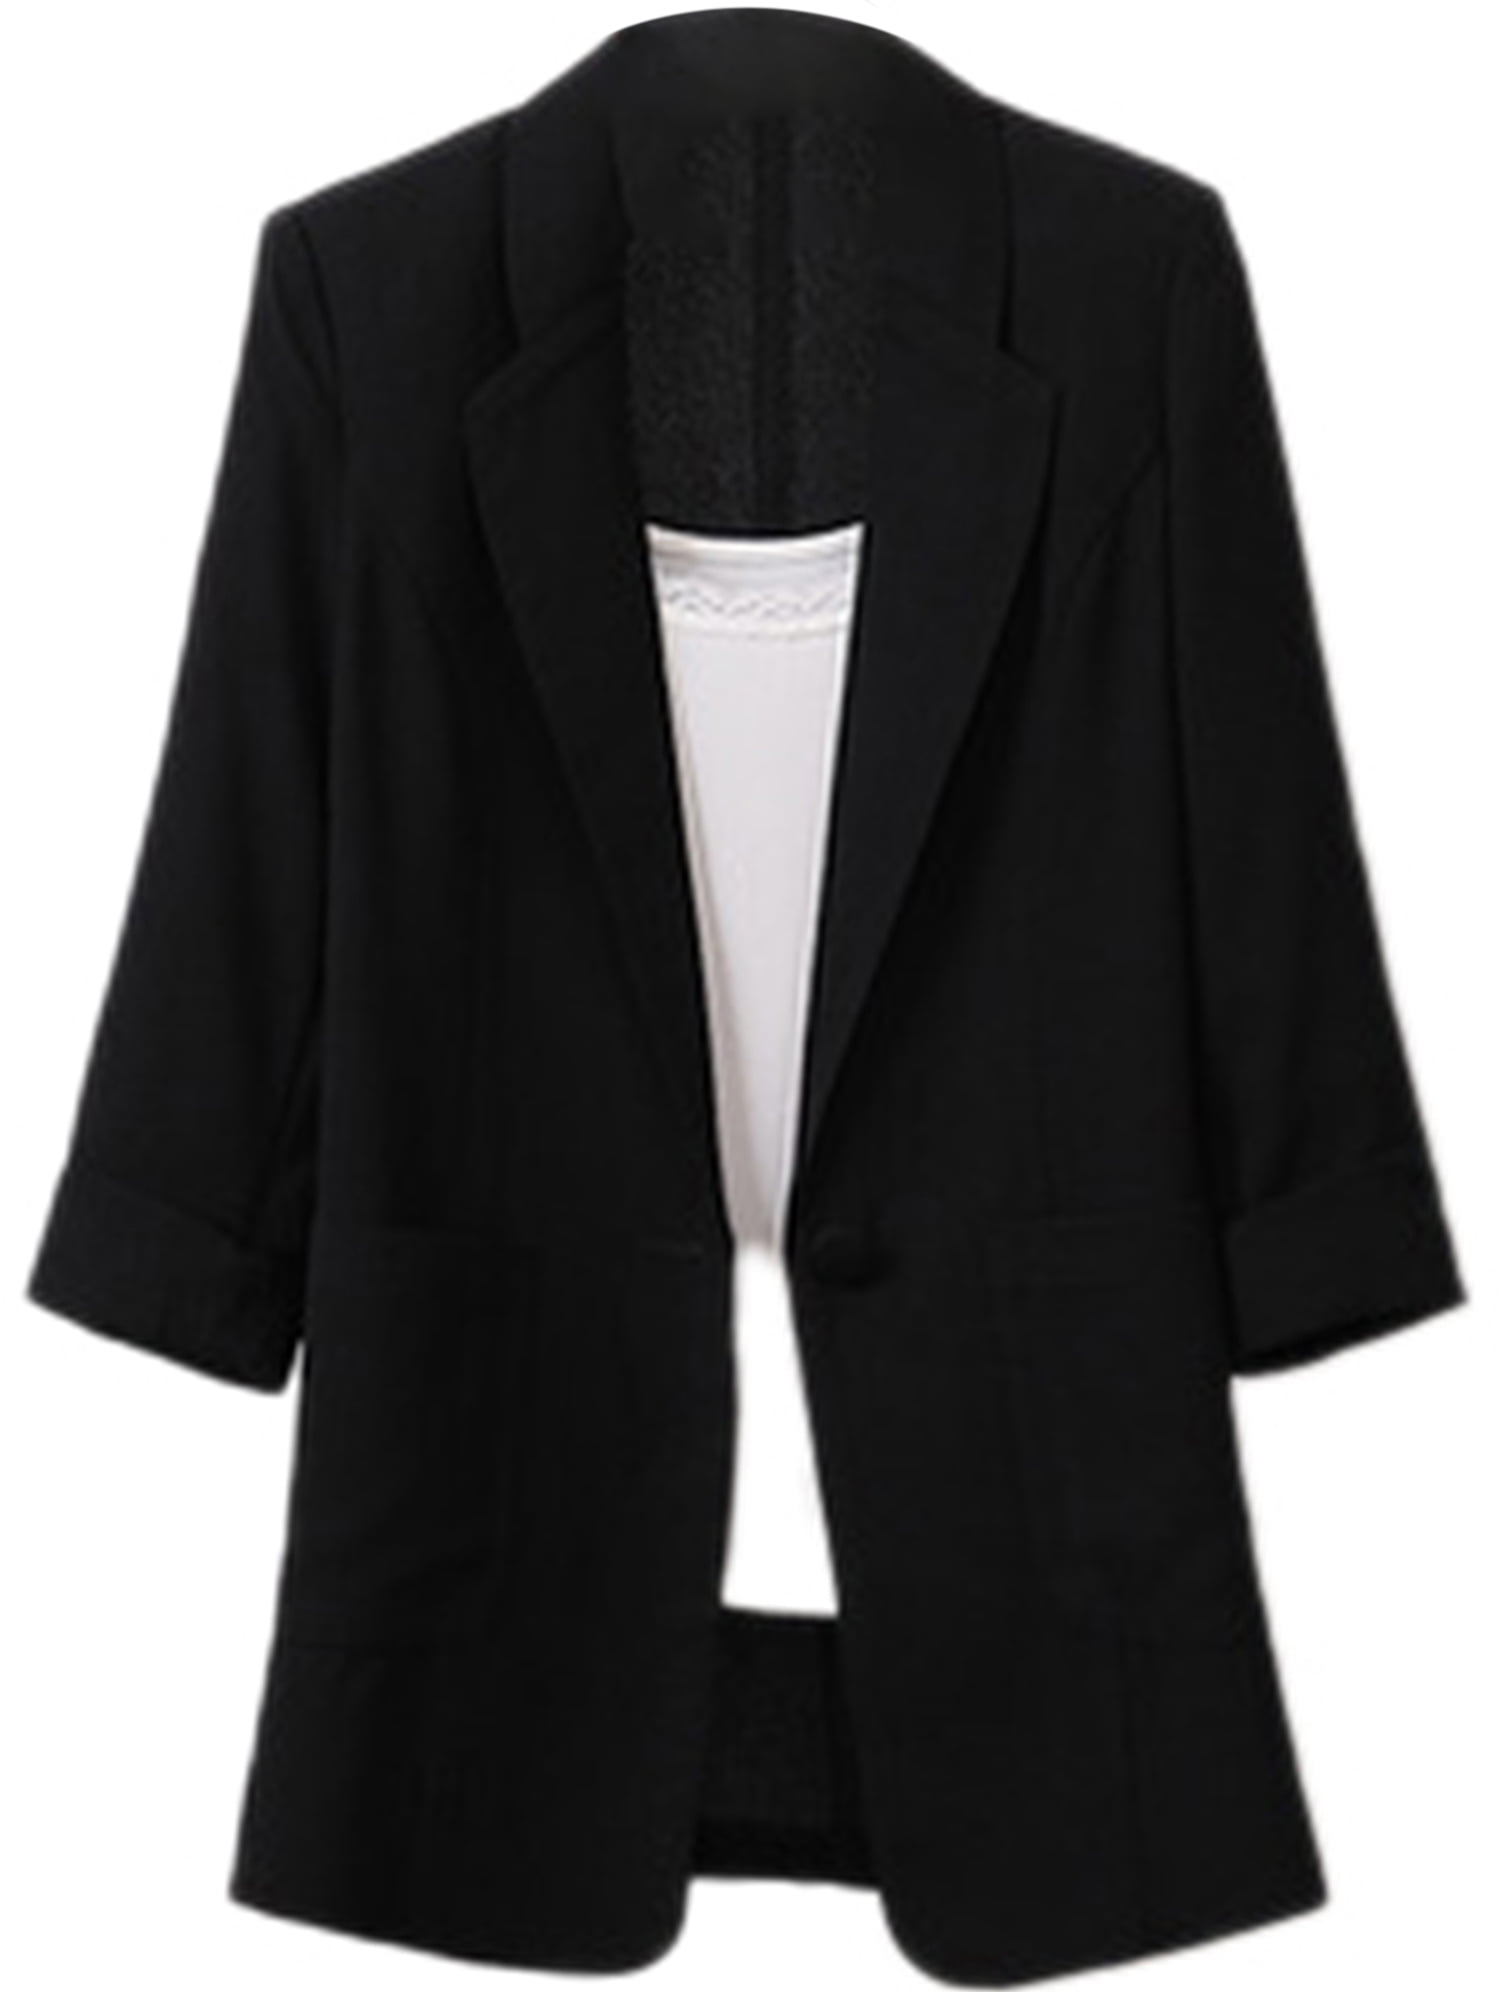 Executive Collection Black Blazer Women's Size 8 | Womens black blazer,  Blazers for women, Black blazers